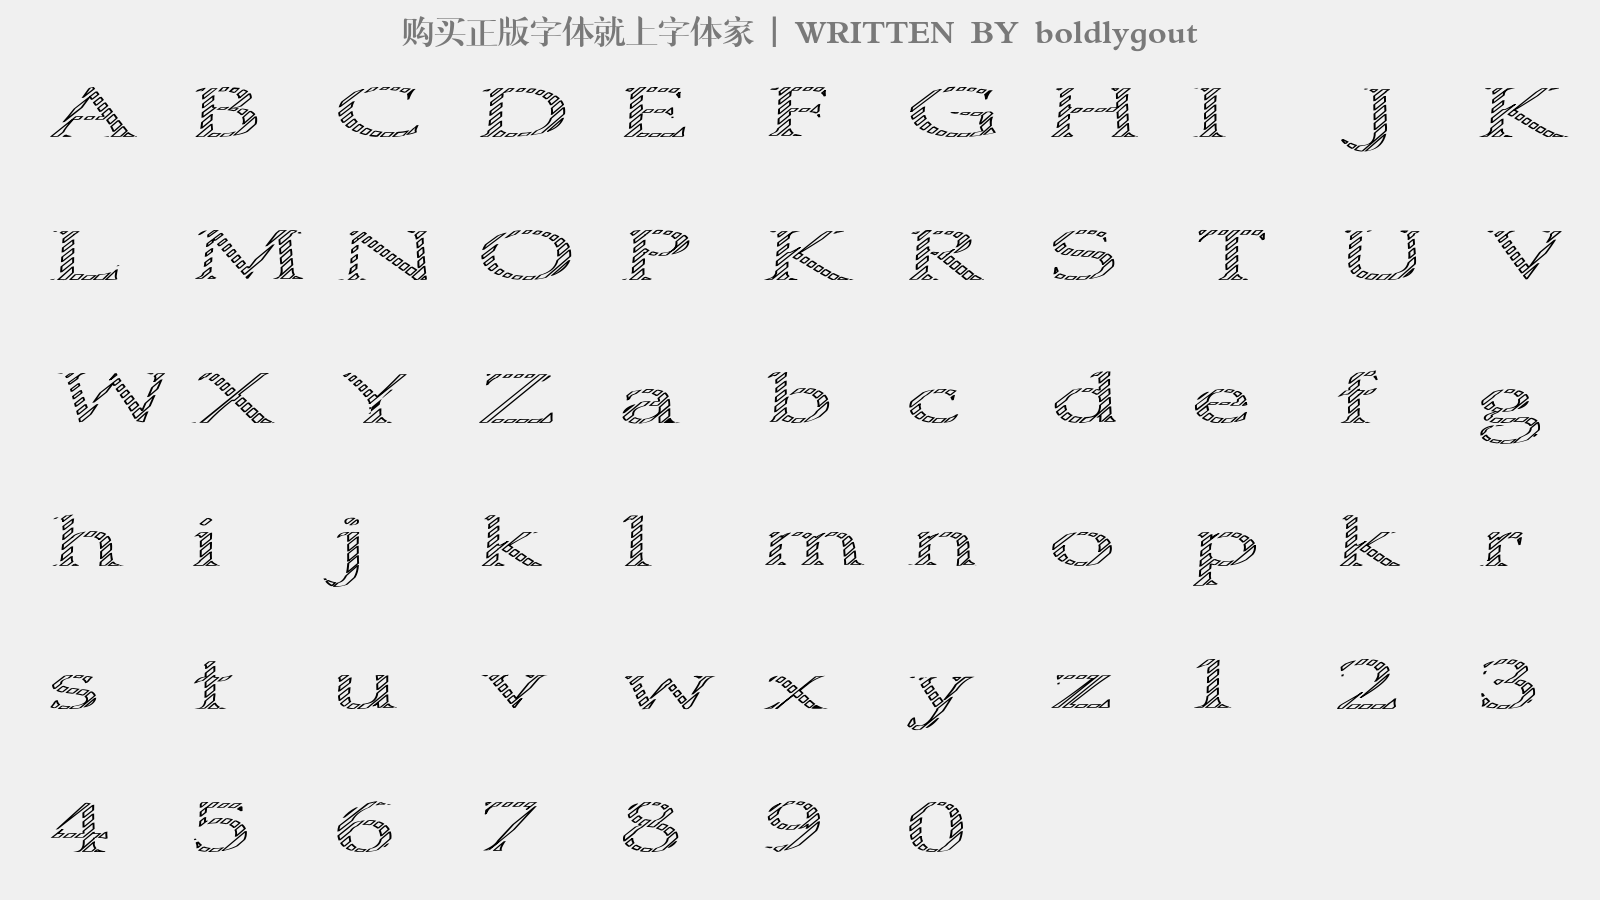 boldlygout - 大写字母/小写字母/数字